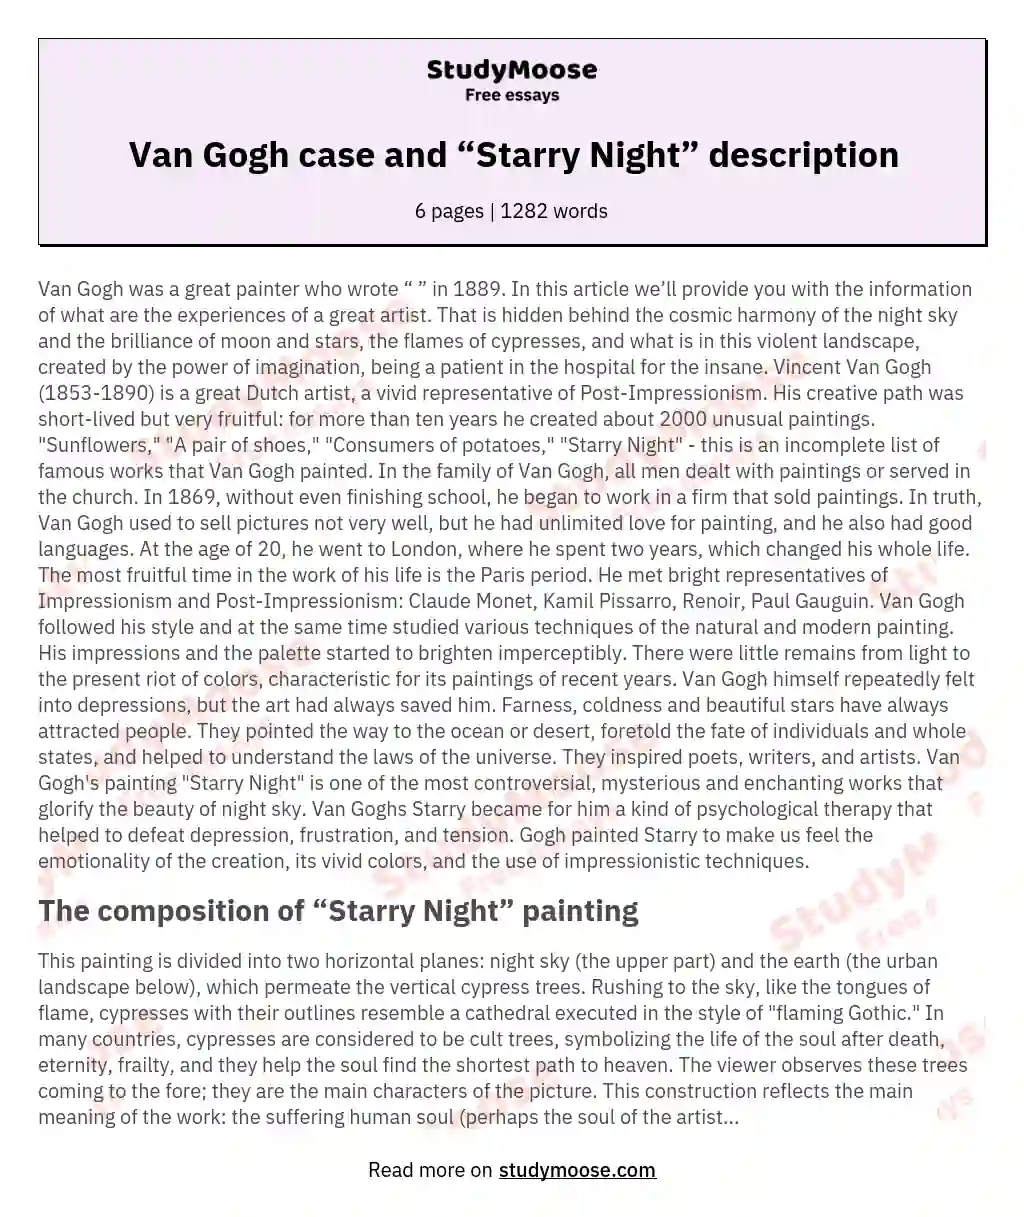 Van Gogh case and “Starry Night” description essay